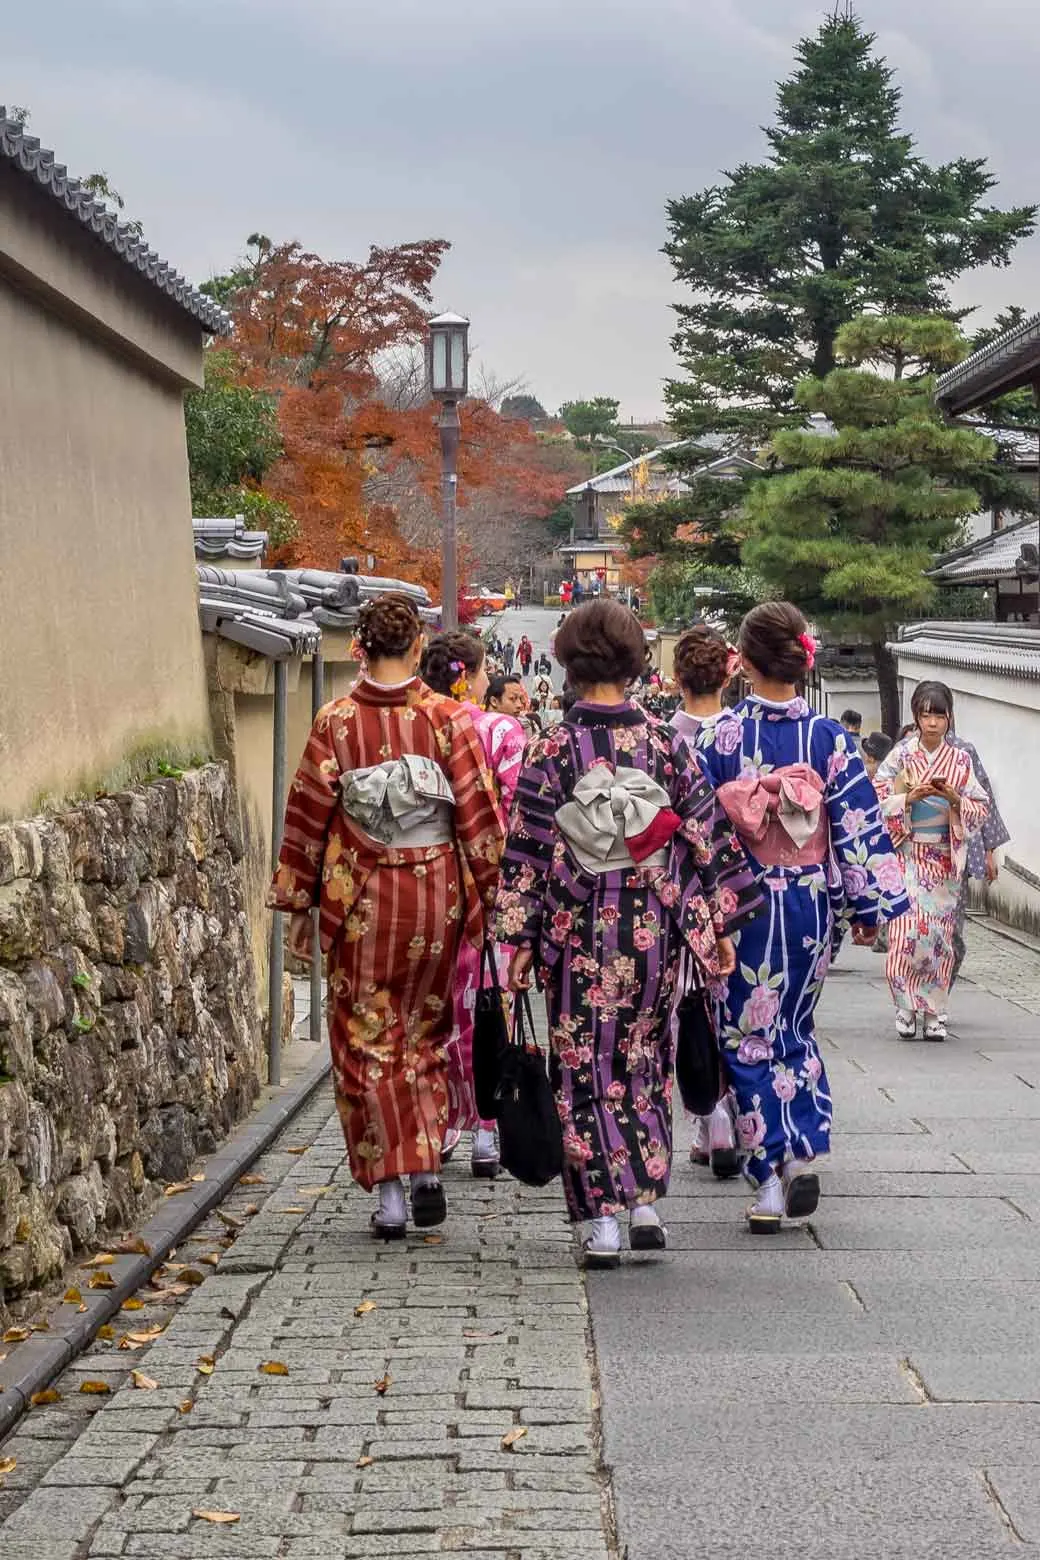 Walking in the streets of Higashiyama, Eastern Kyoto